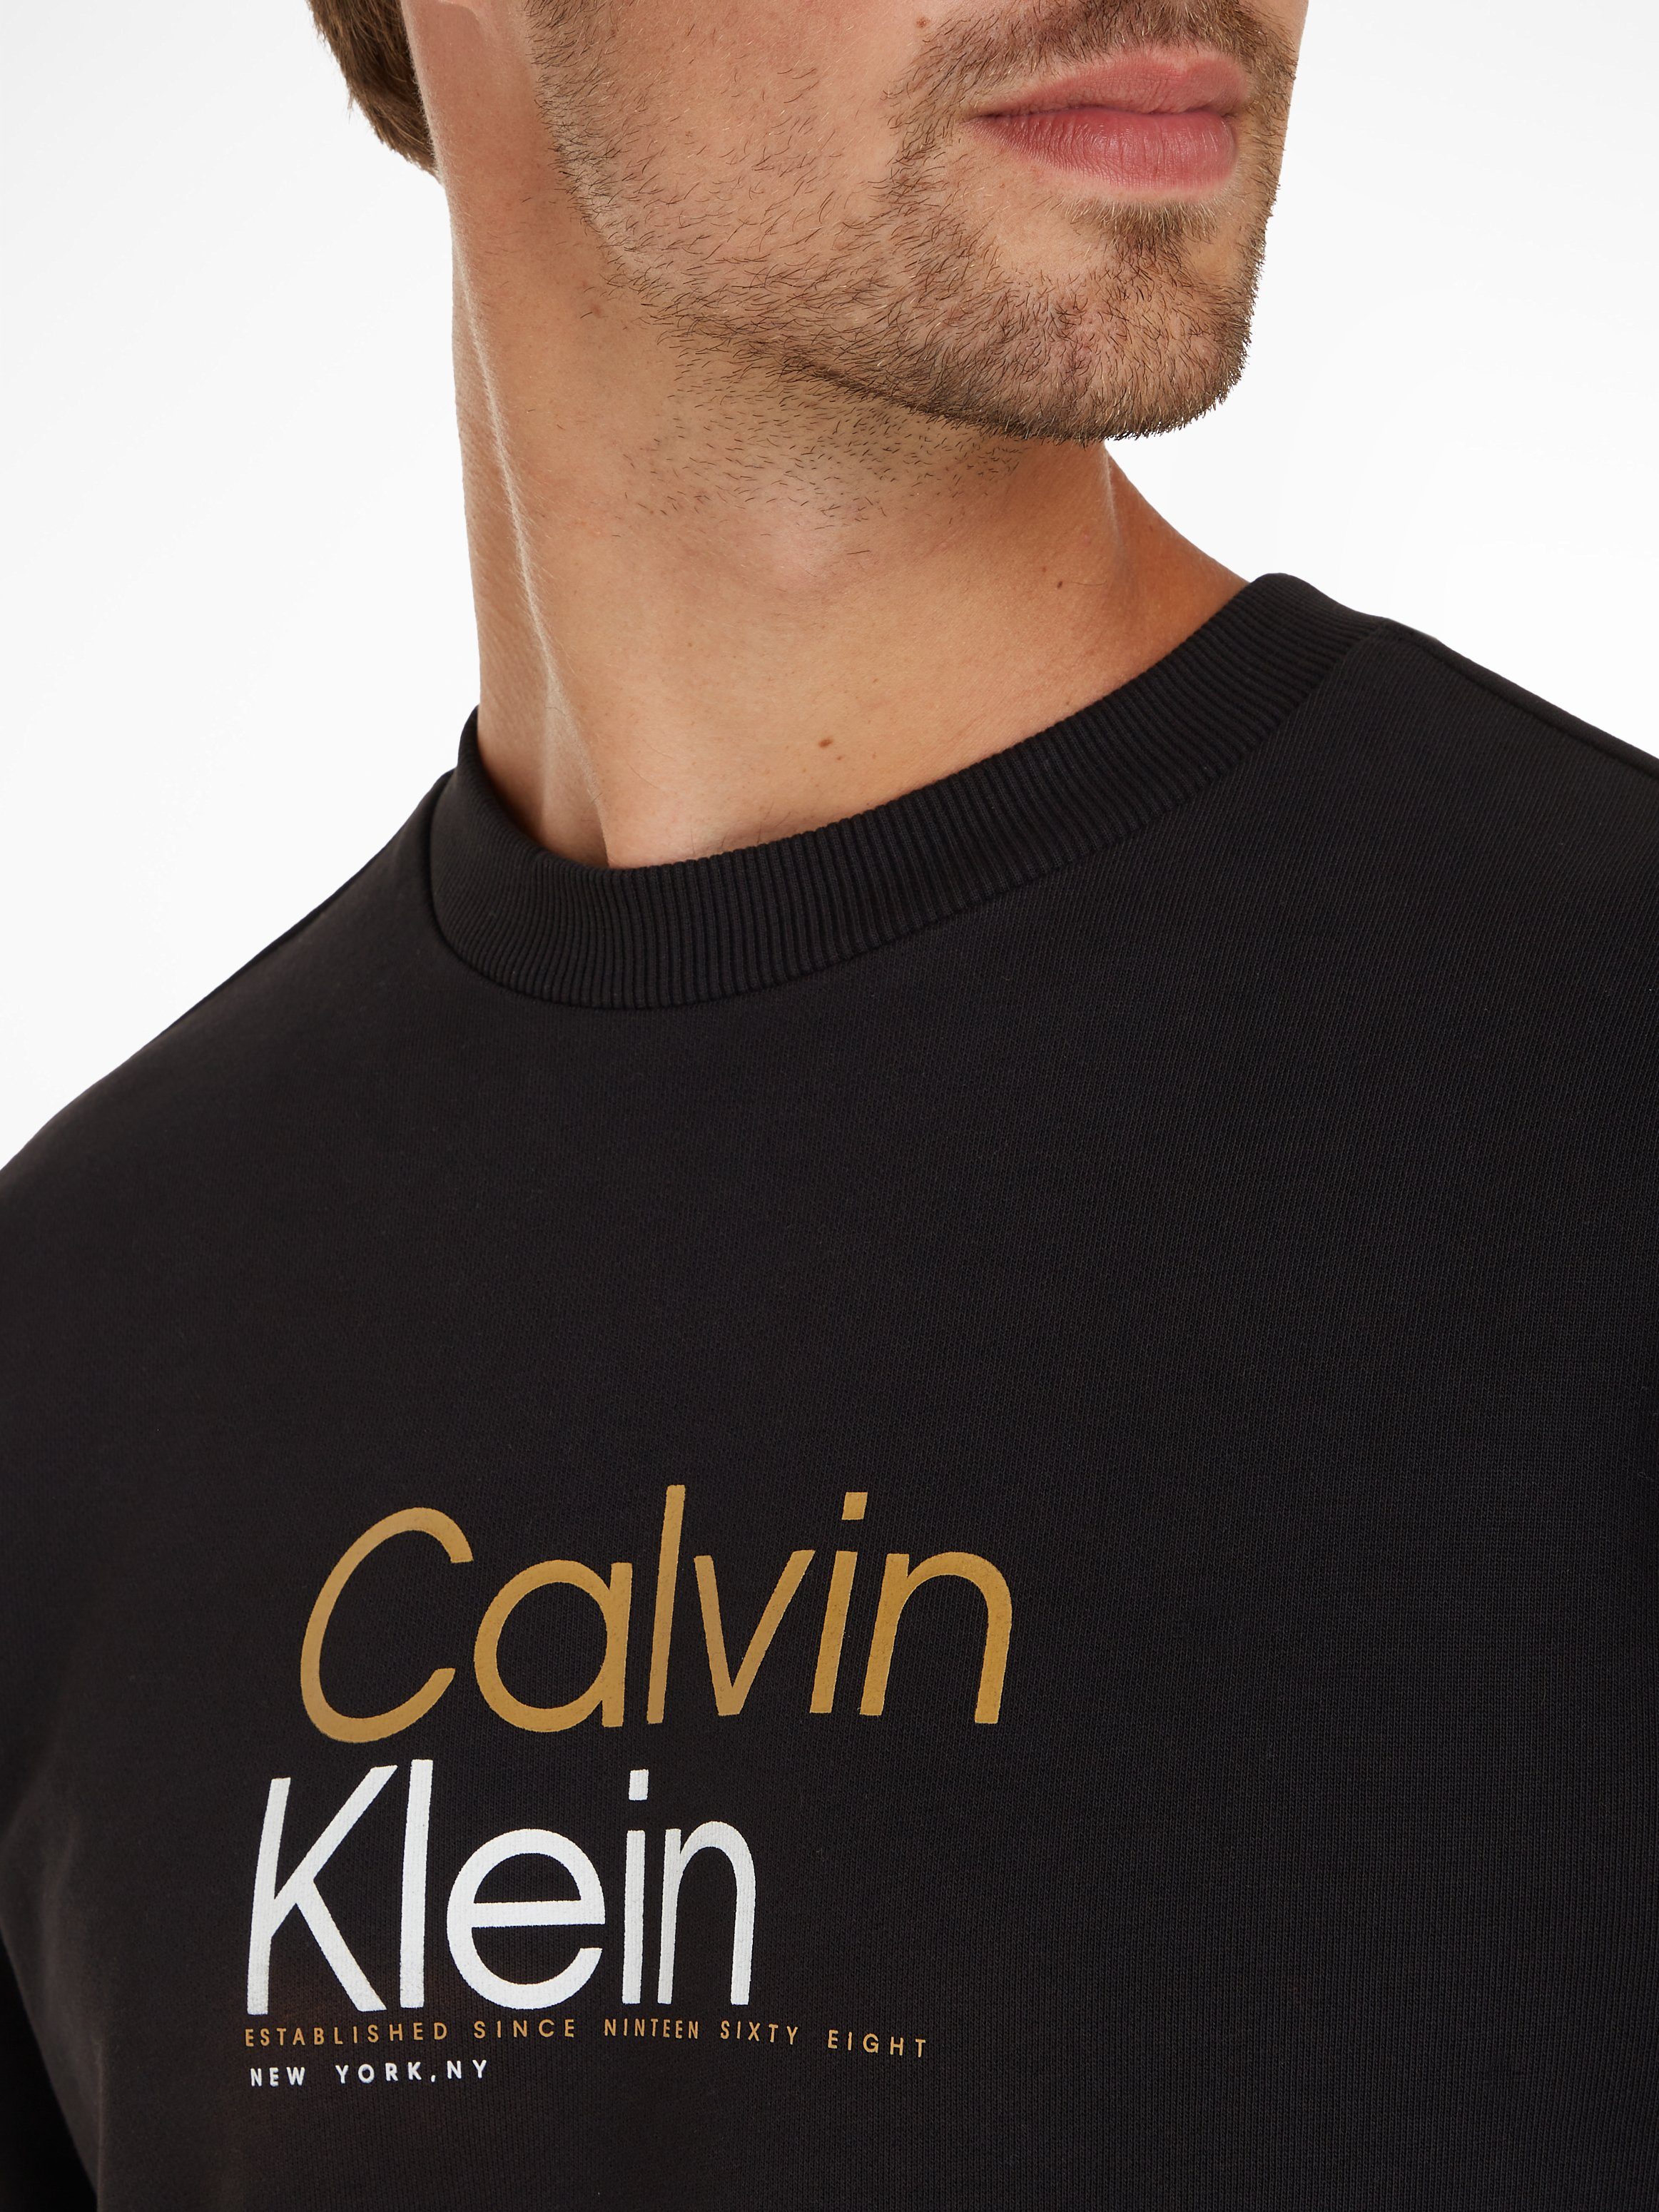 Markenlabel COLOR LOGO mit Klein Sweatshirt SWEATSHIRT Black MULTI Ck Calvin